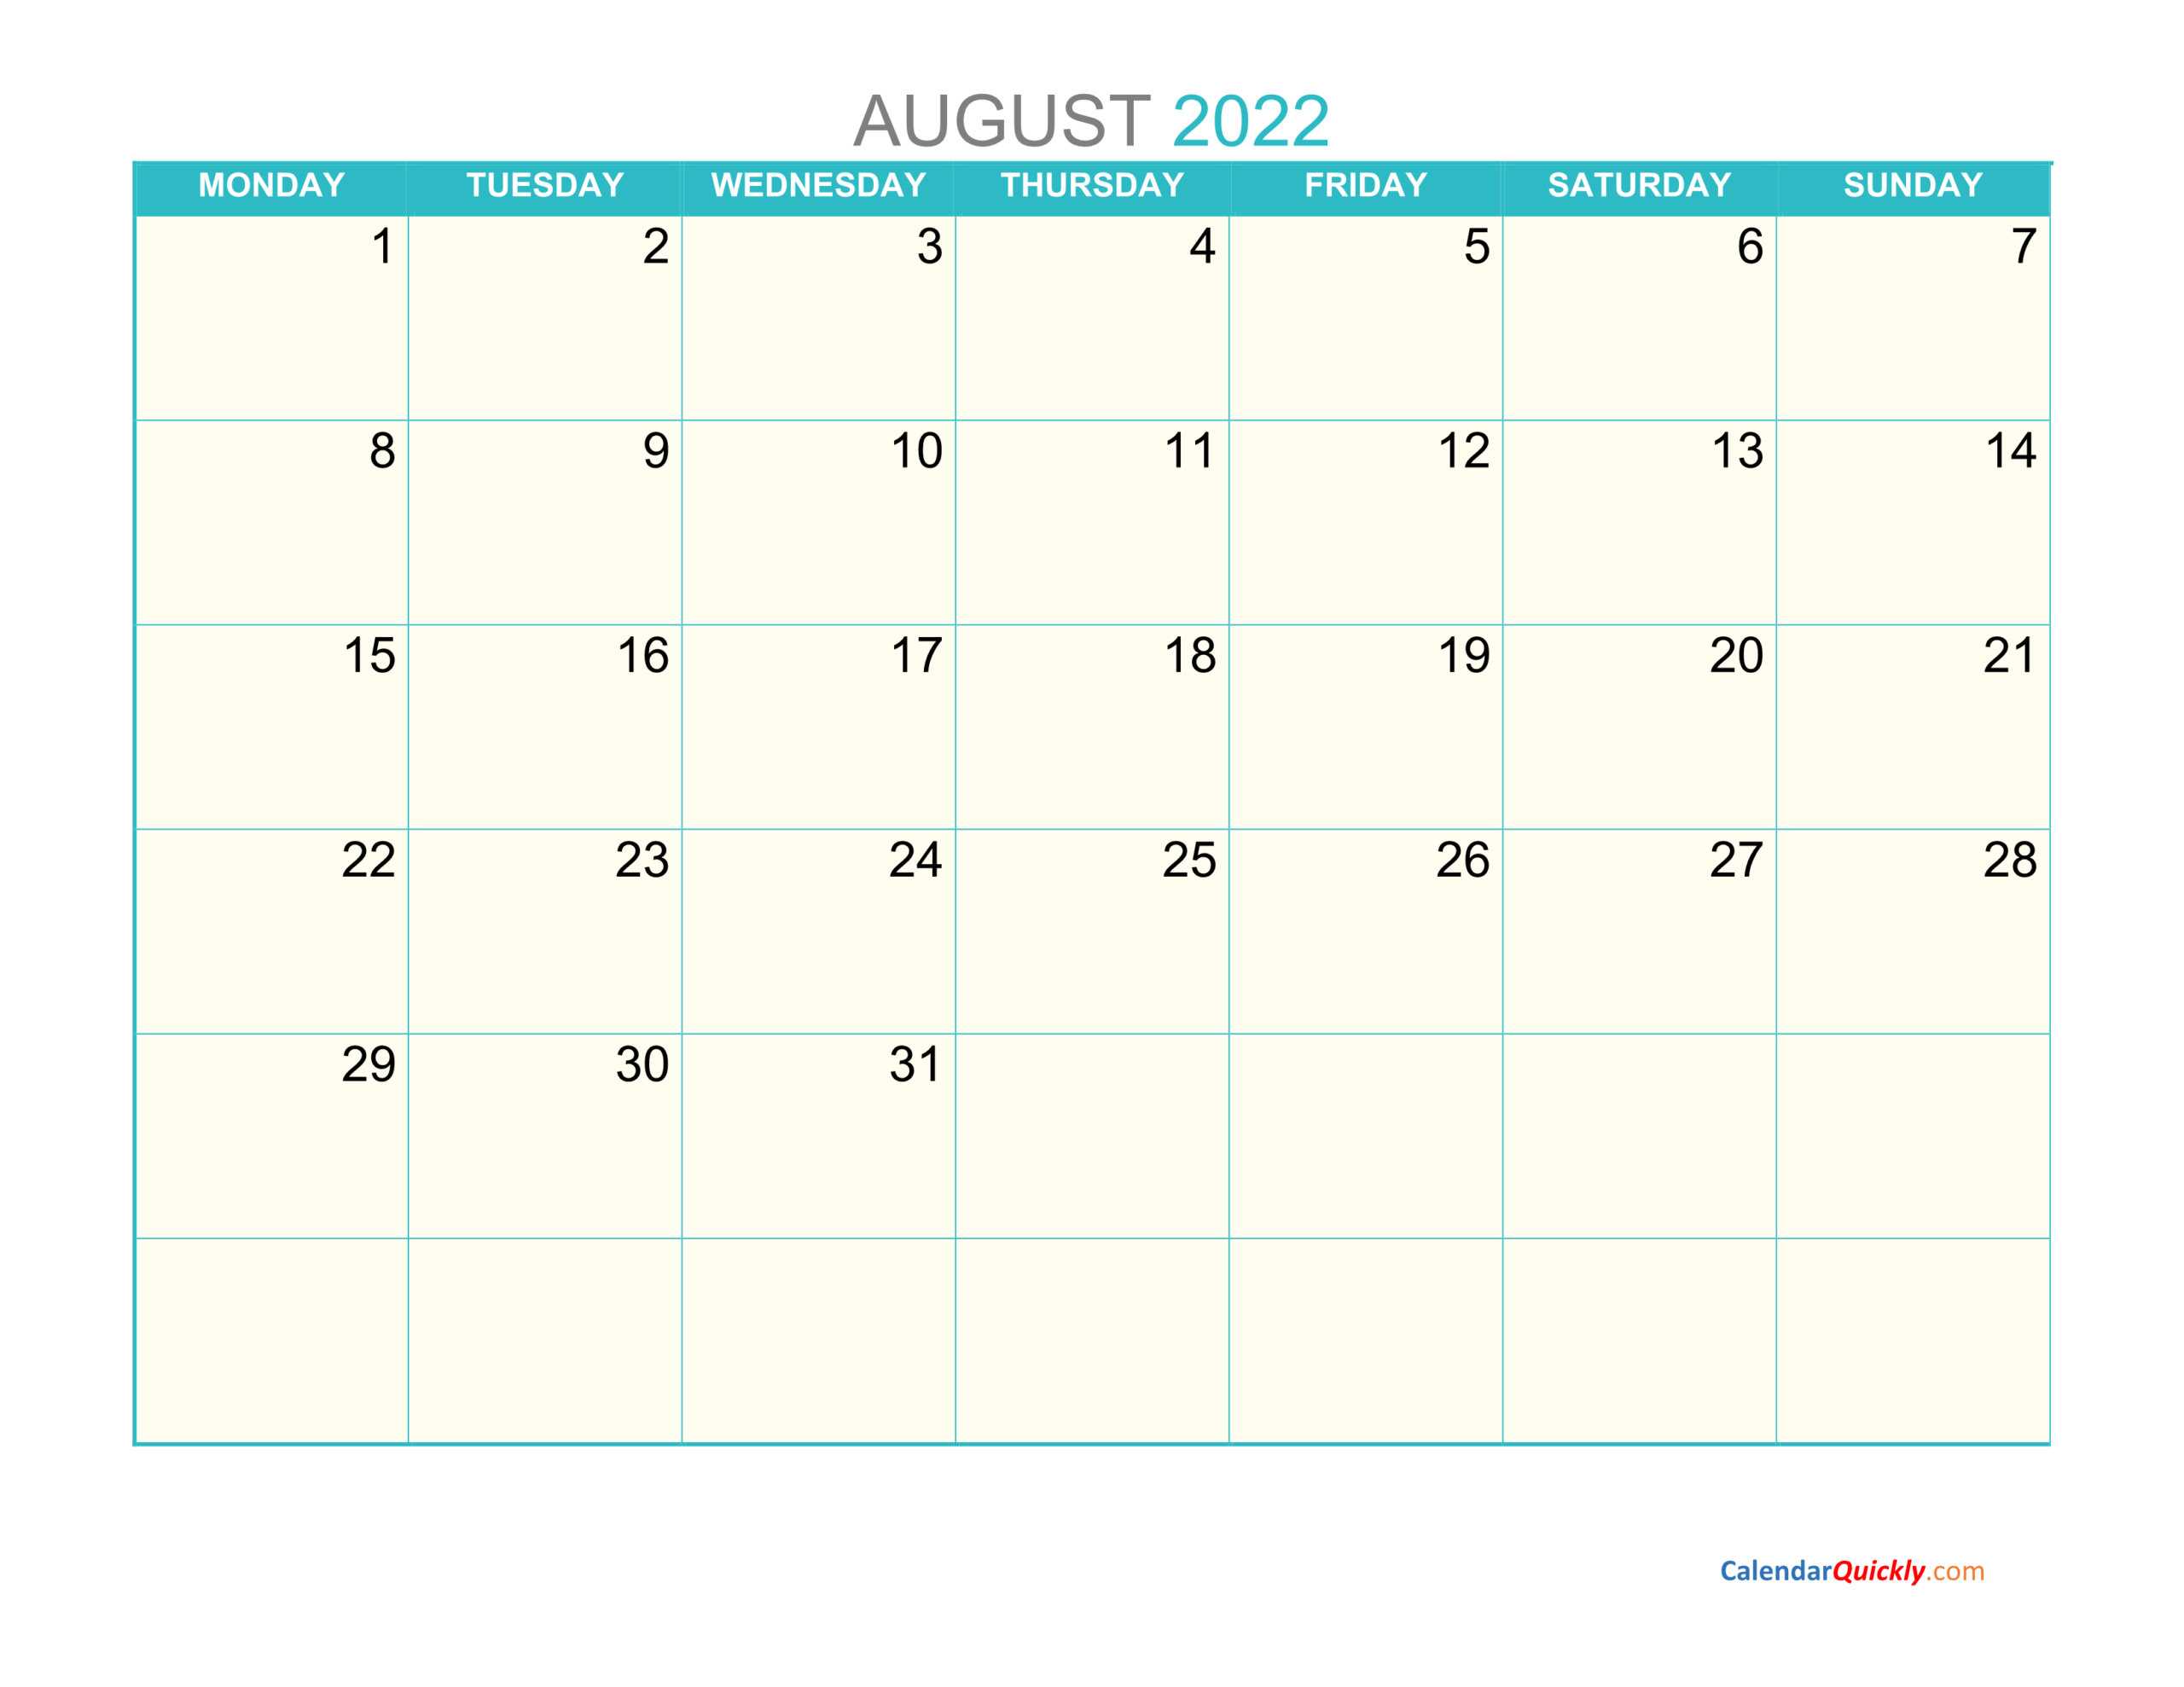 August Monday 2022 Calendar Printable | Calendar Quickly intended for Printable August 2022 Calendar